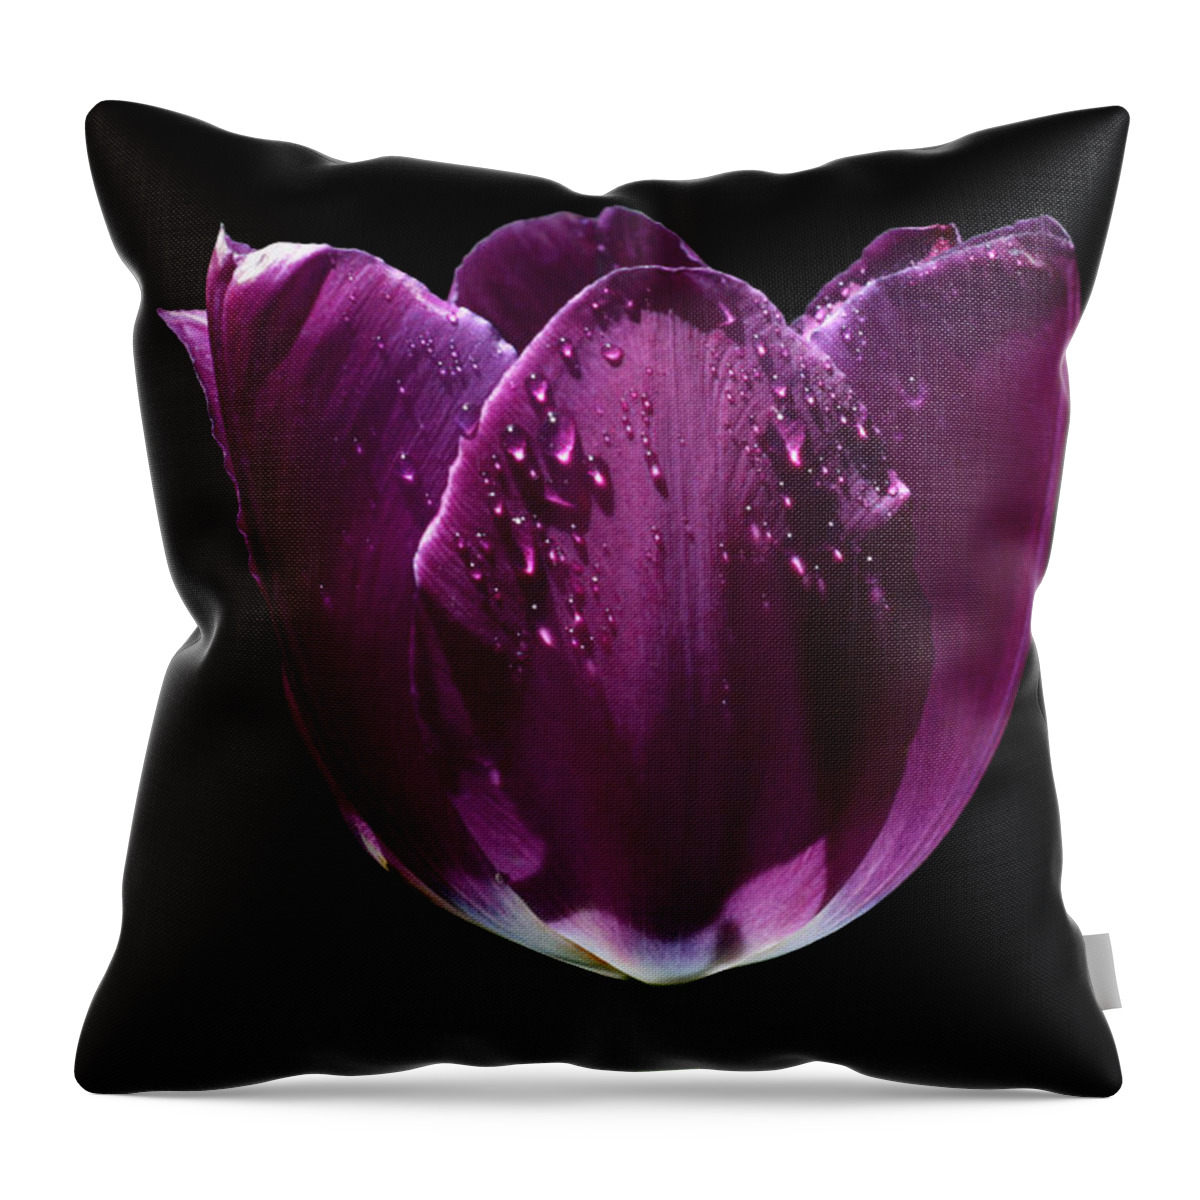 Tulip Throw Pillow featuring the photograph Regal Purple by Doug Norkum